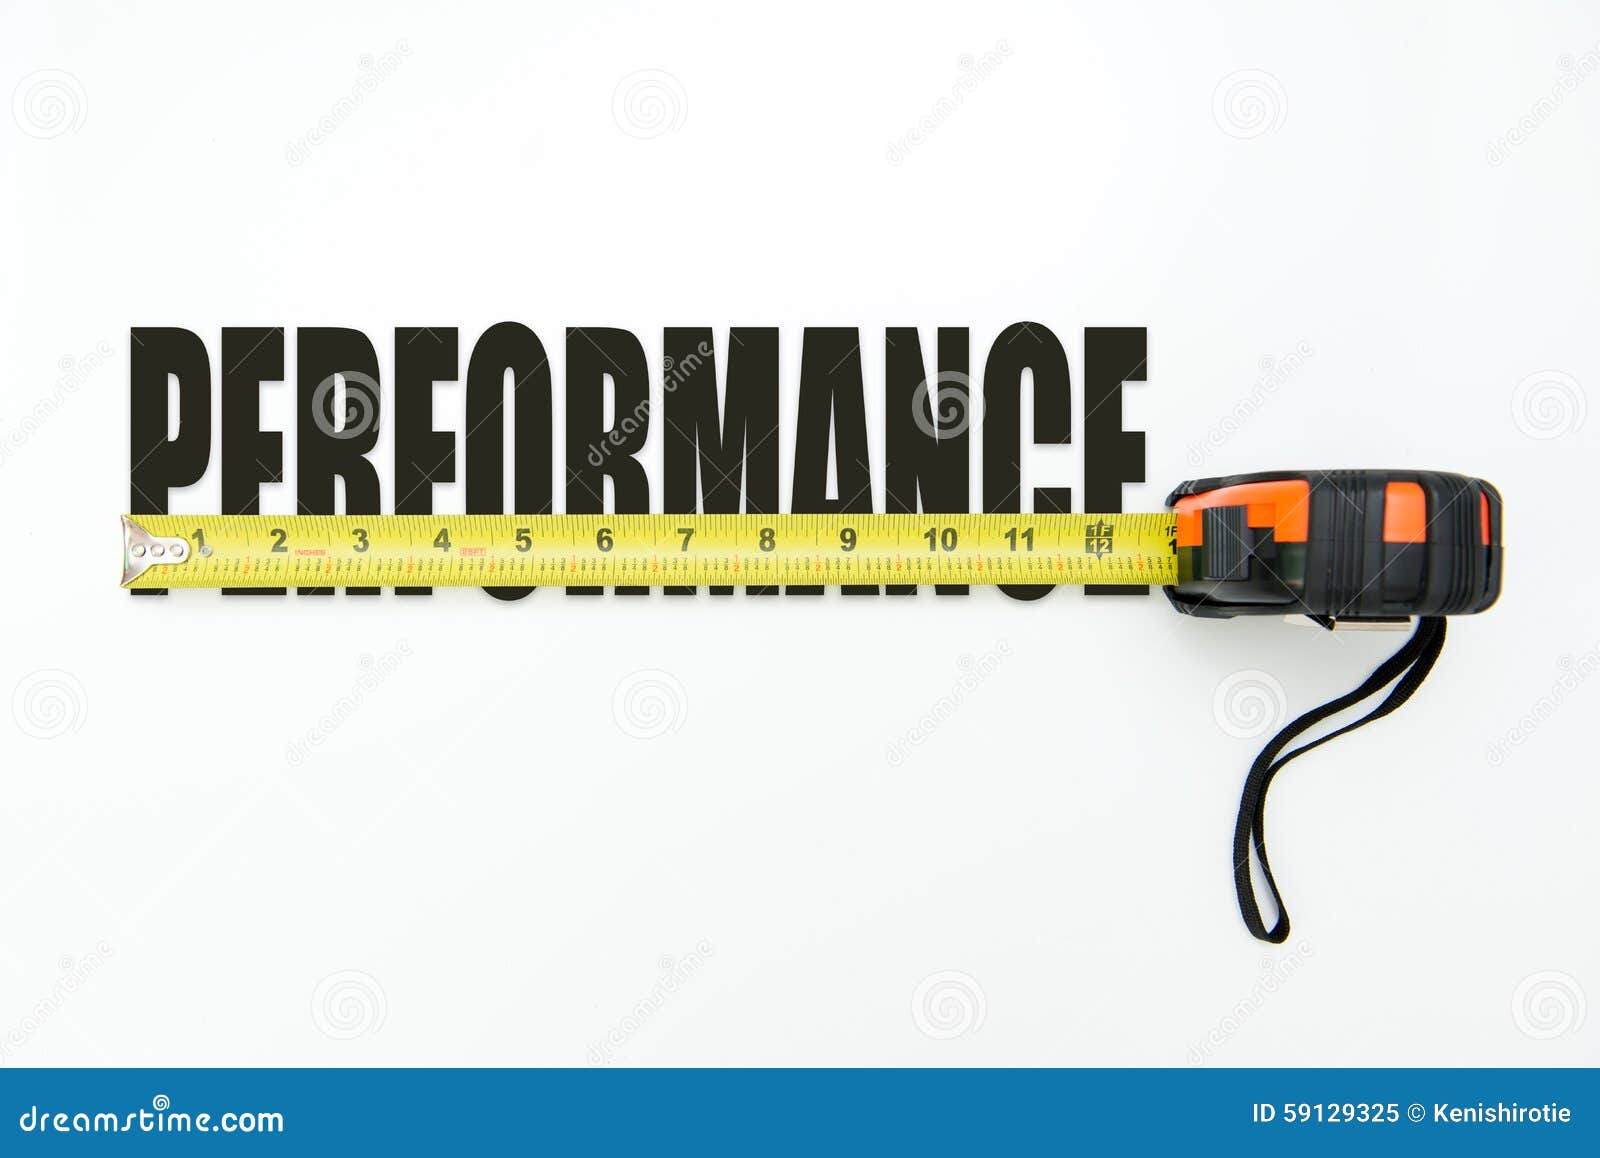 measure performance